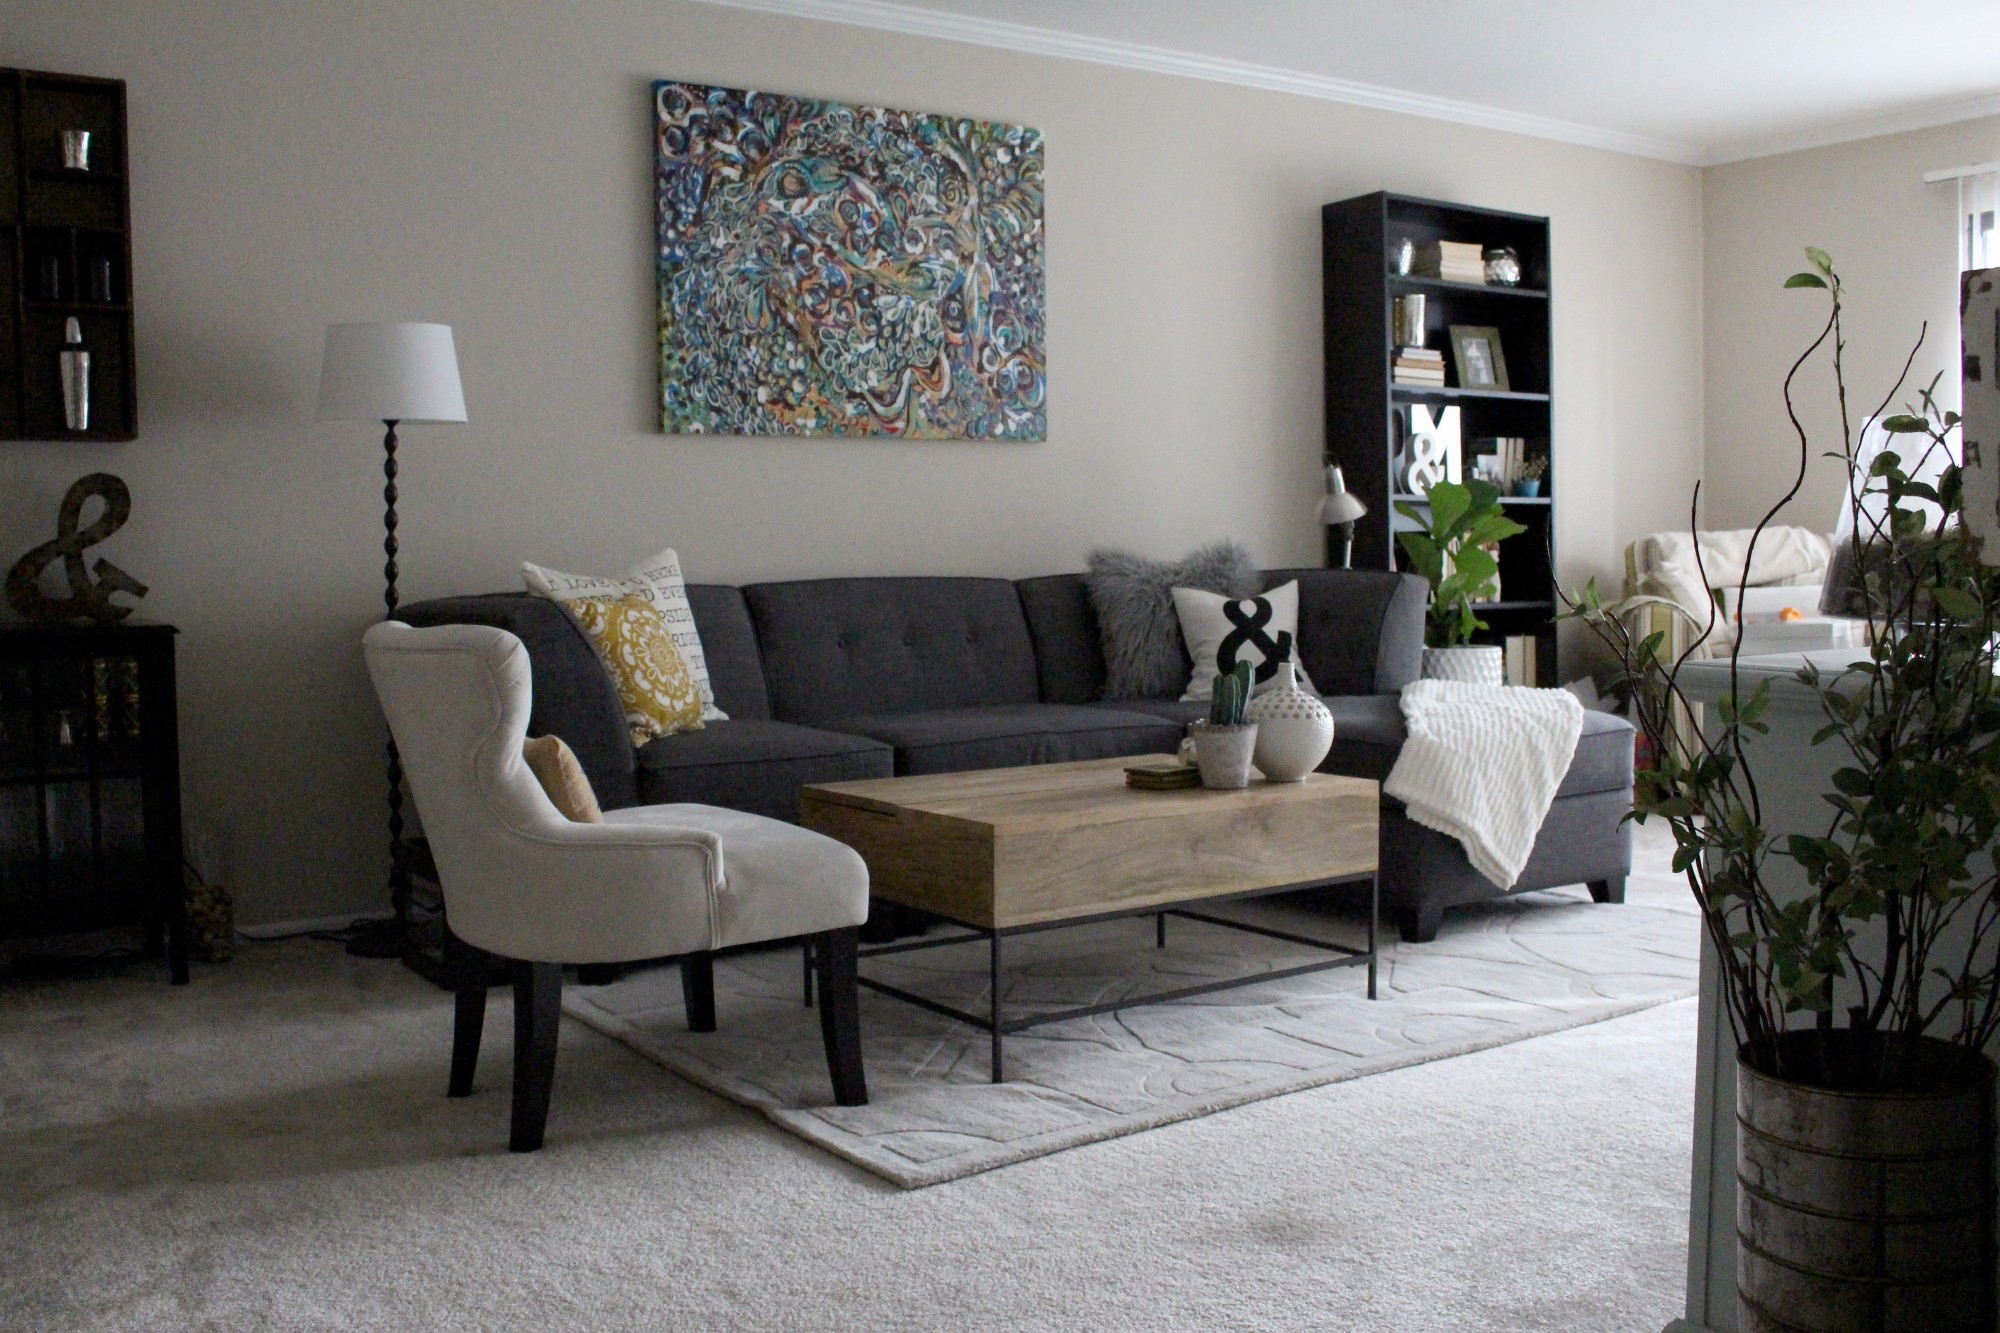 redoing living room ideas